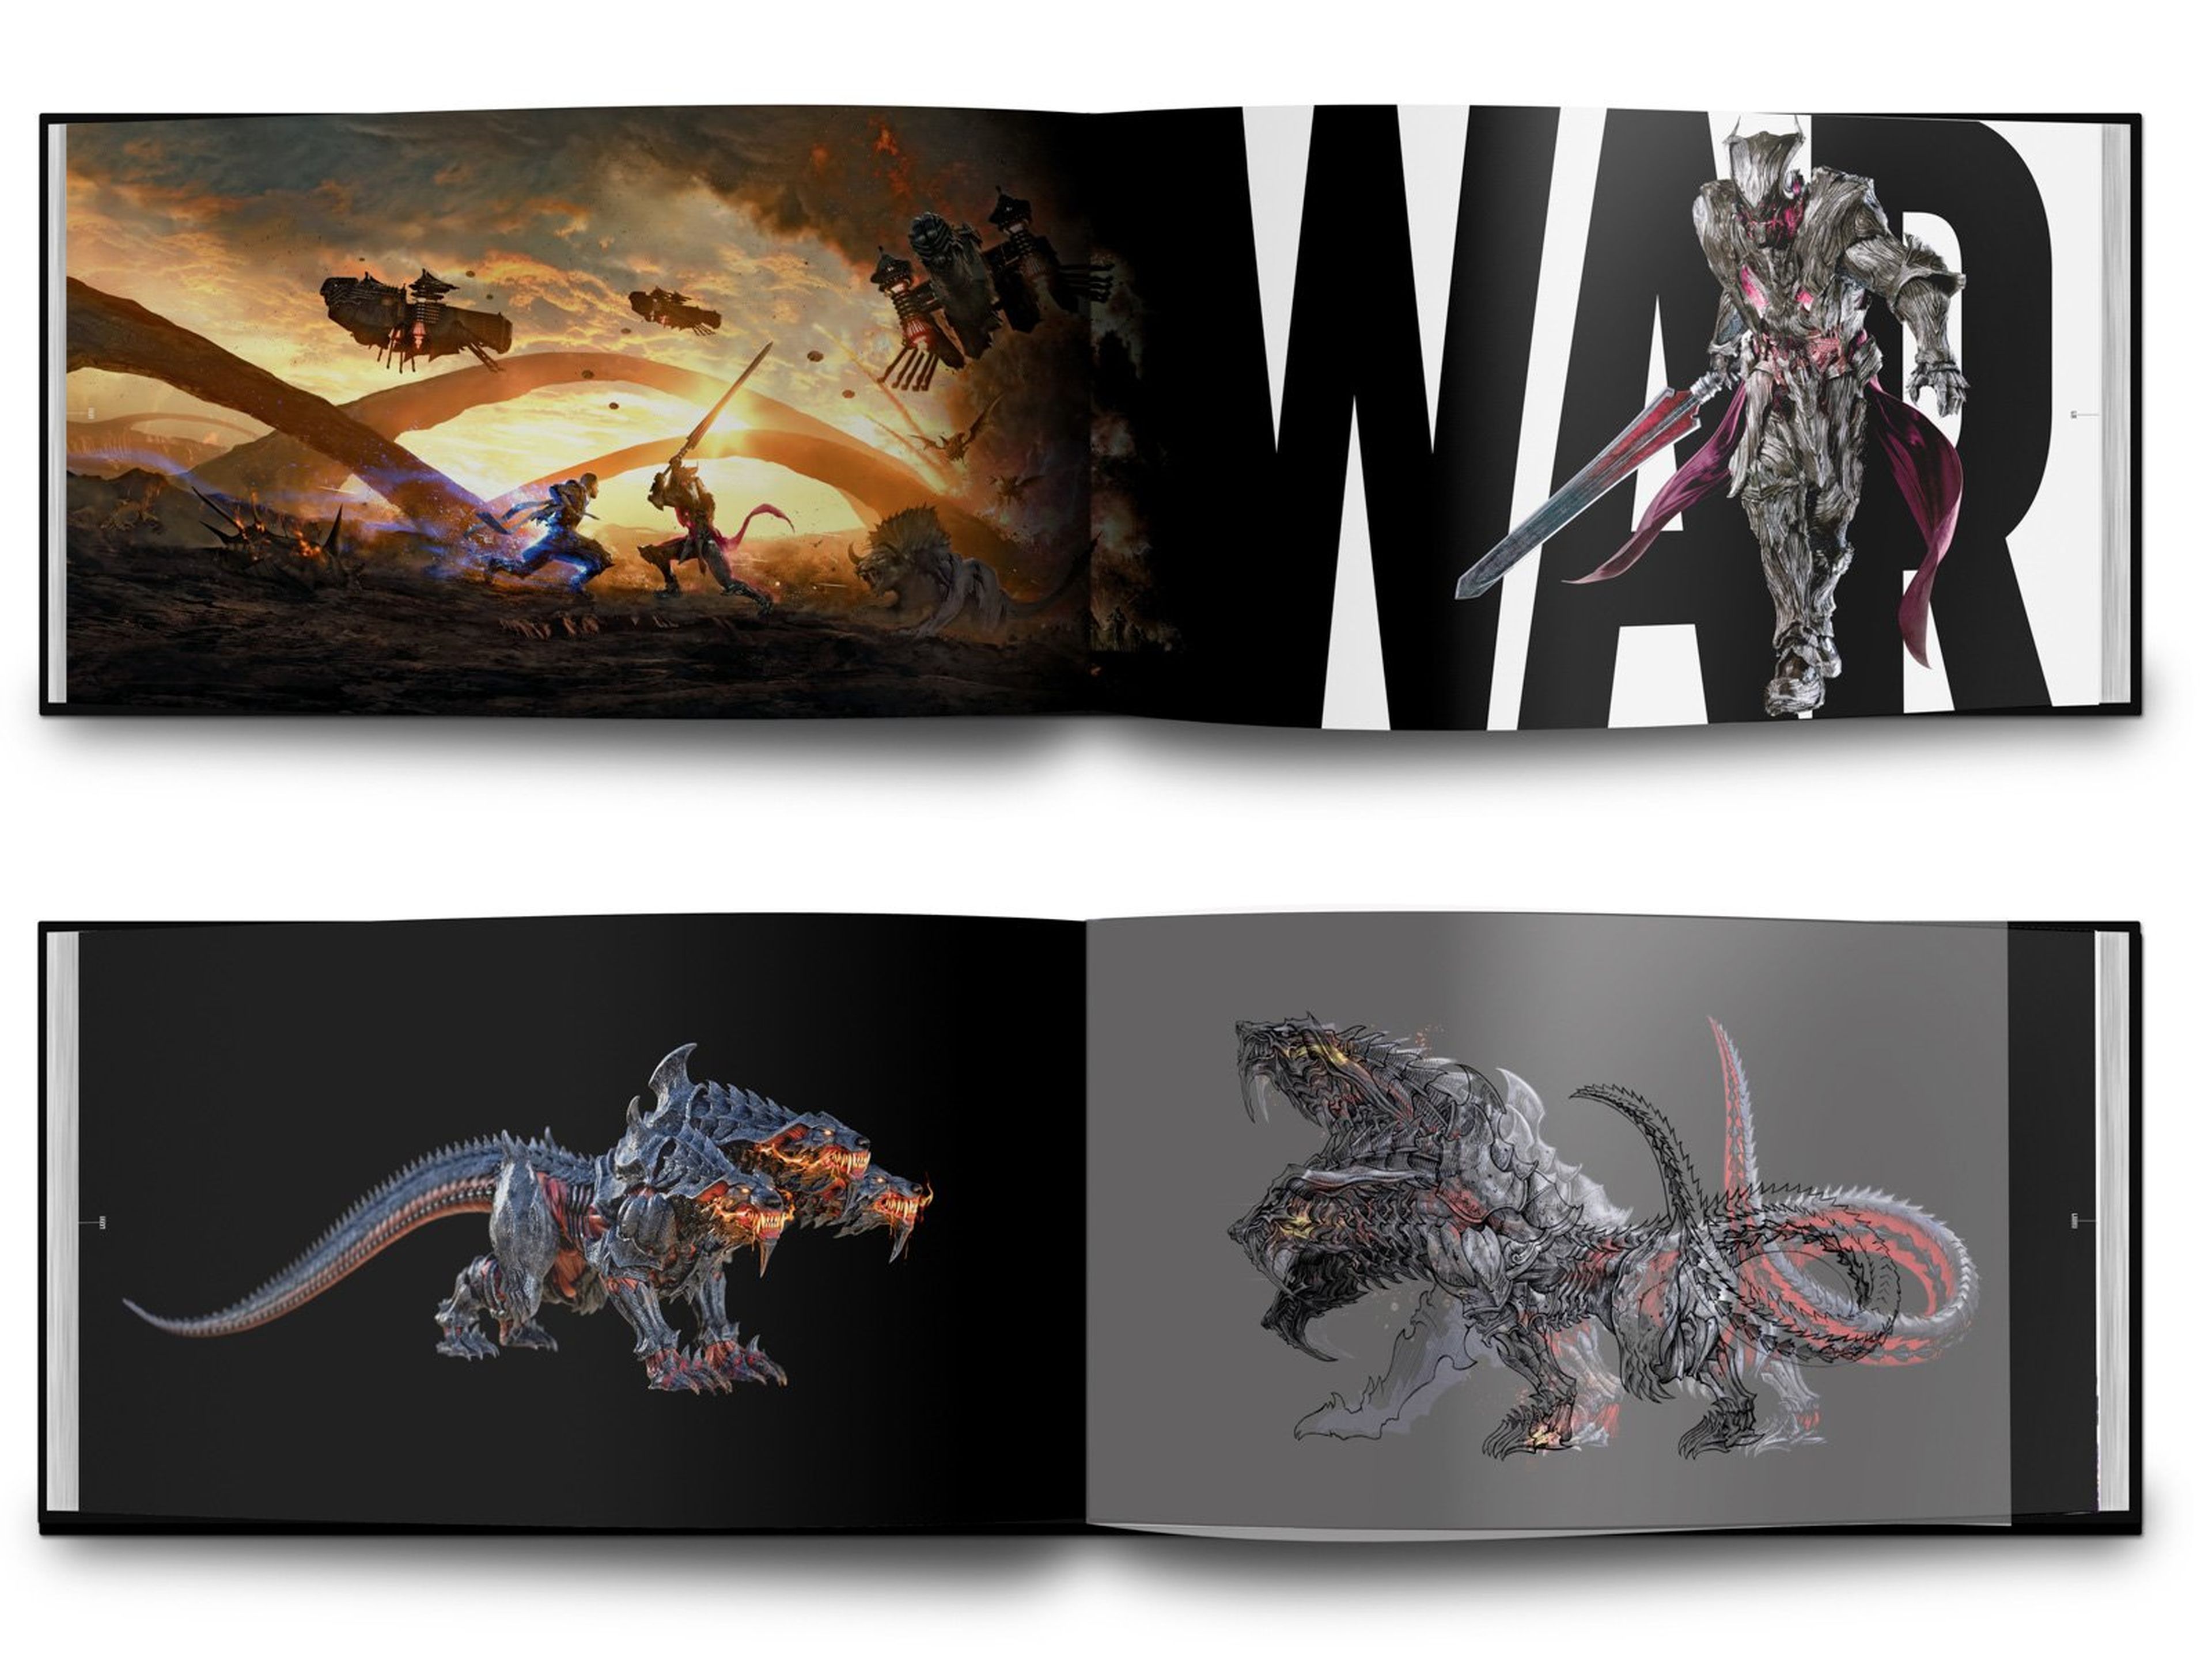 The Art & Design of Final Fantasy XV